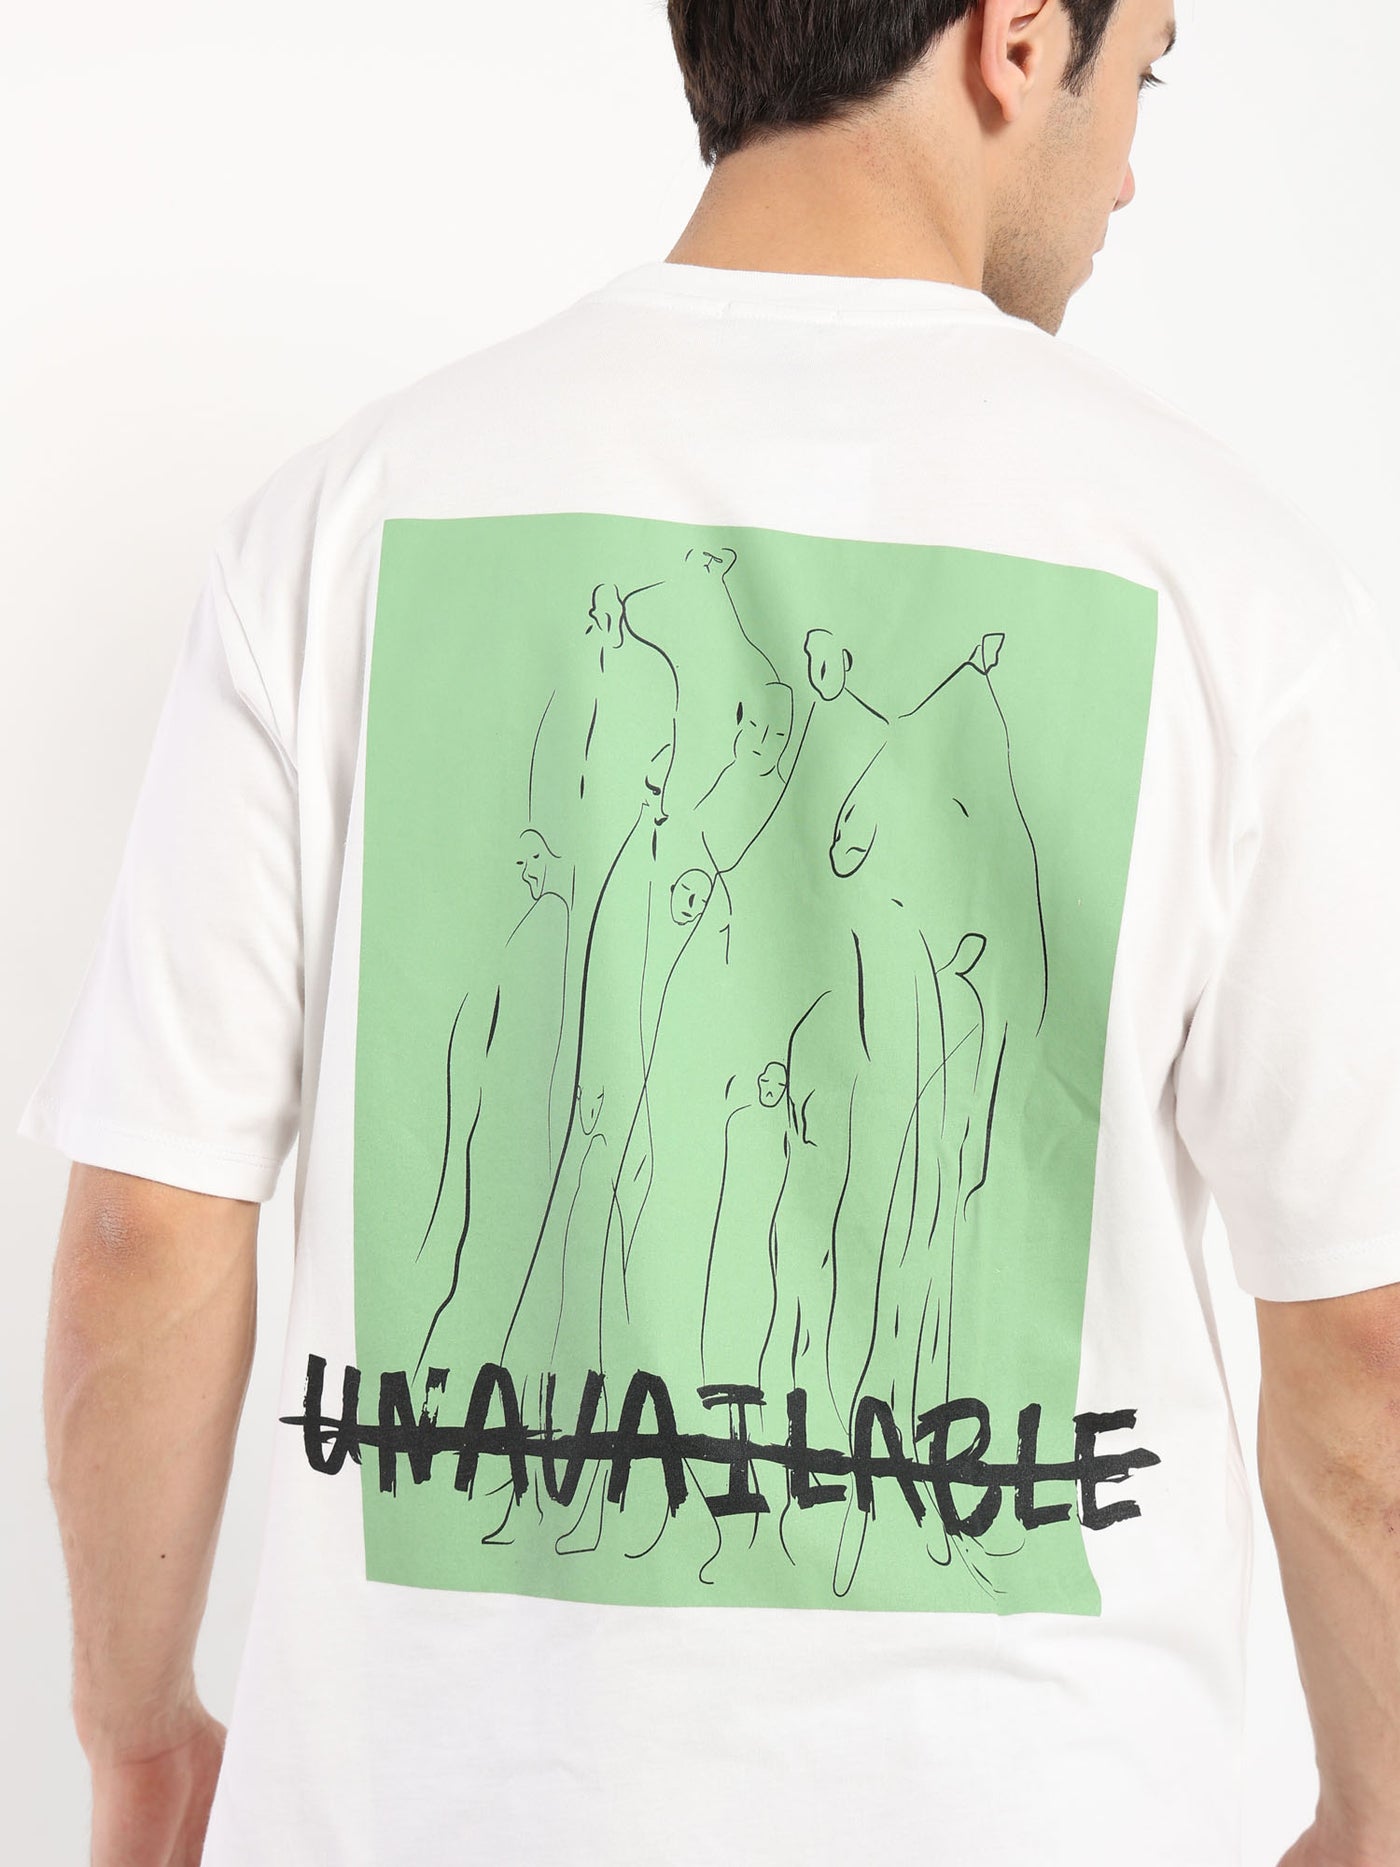 T-Shirt - "Unavailable" Print - Oversized